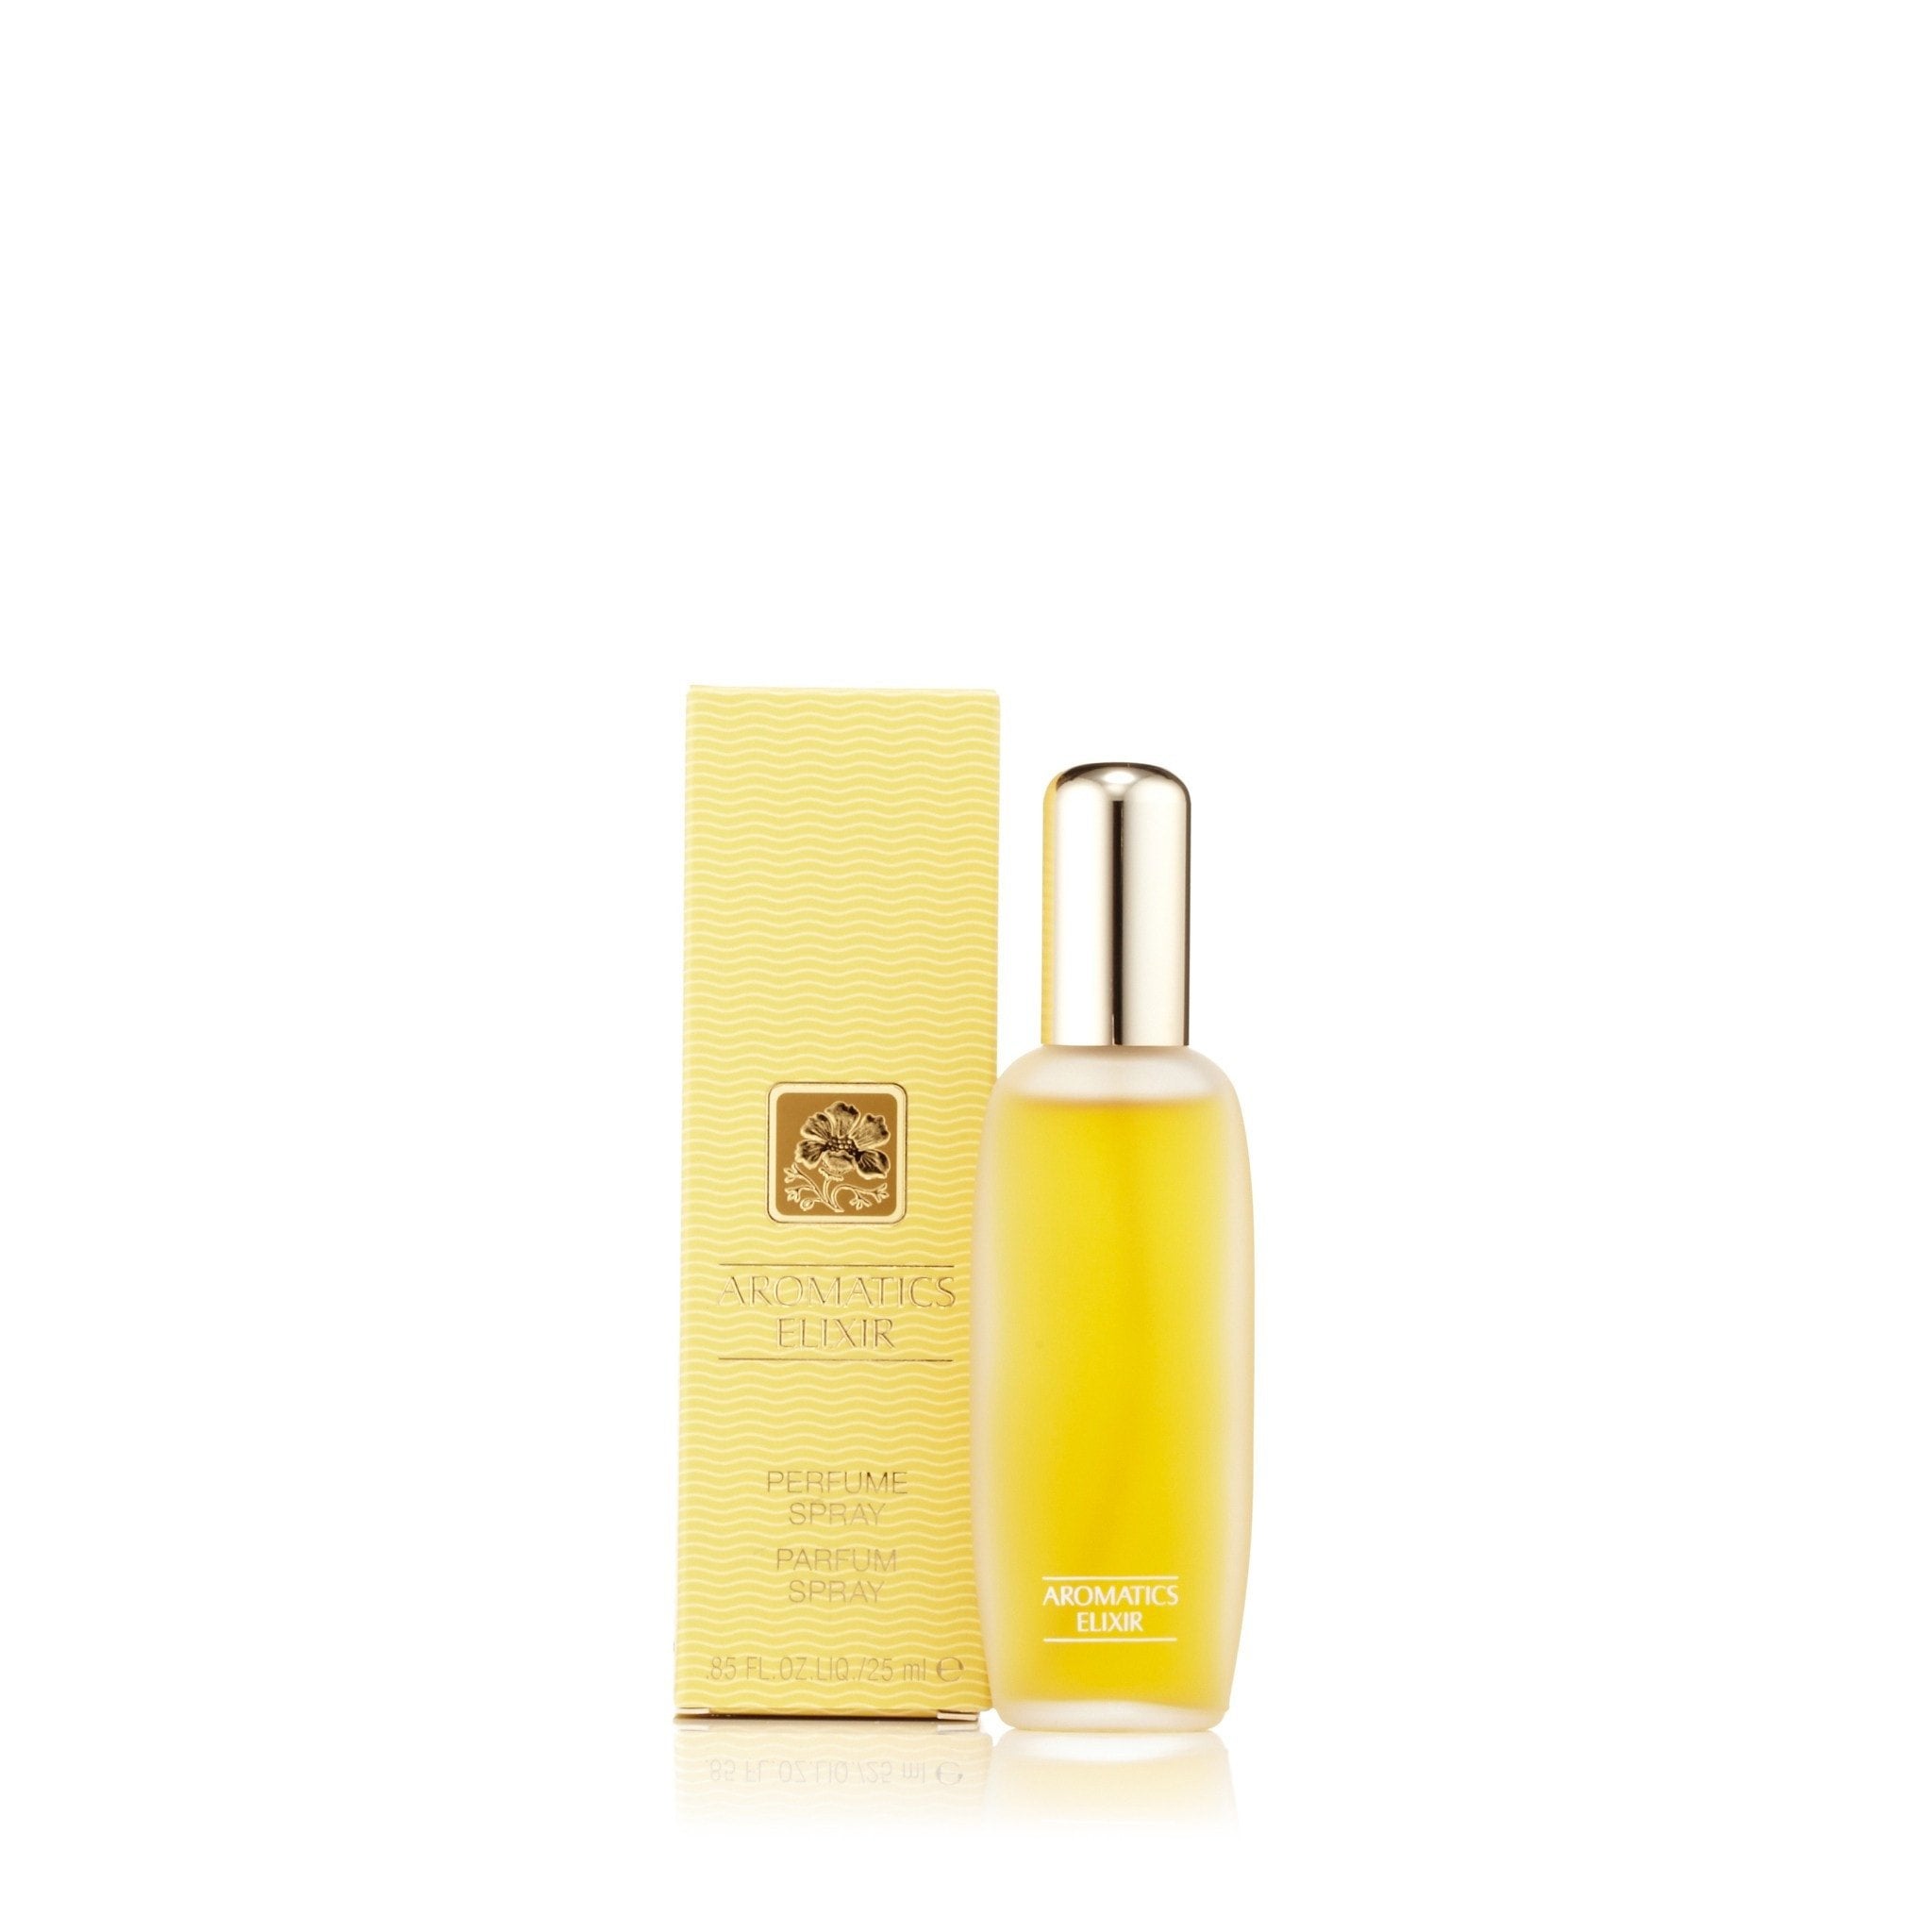 Aromatics Elixir Eau de Parfum Spray for by Clinique – Perfumania